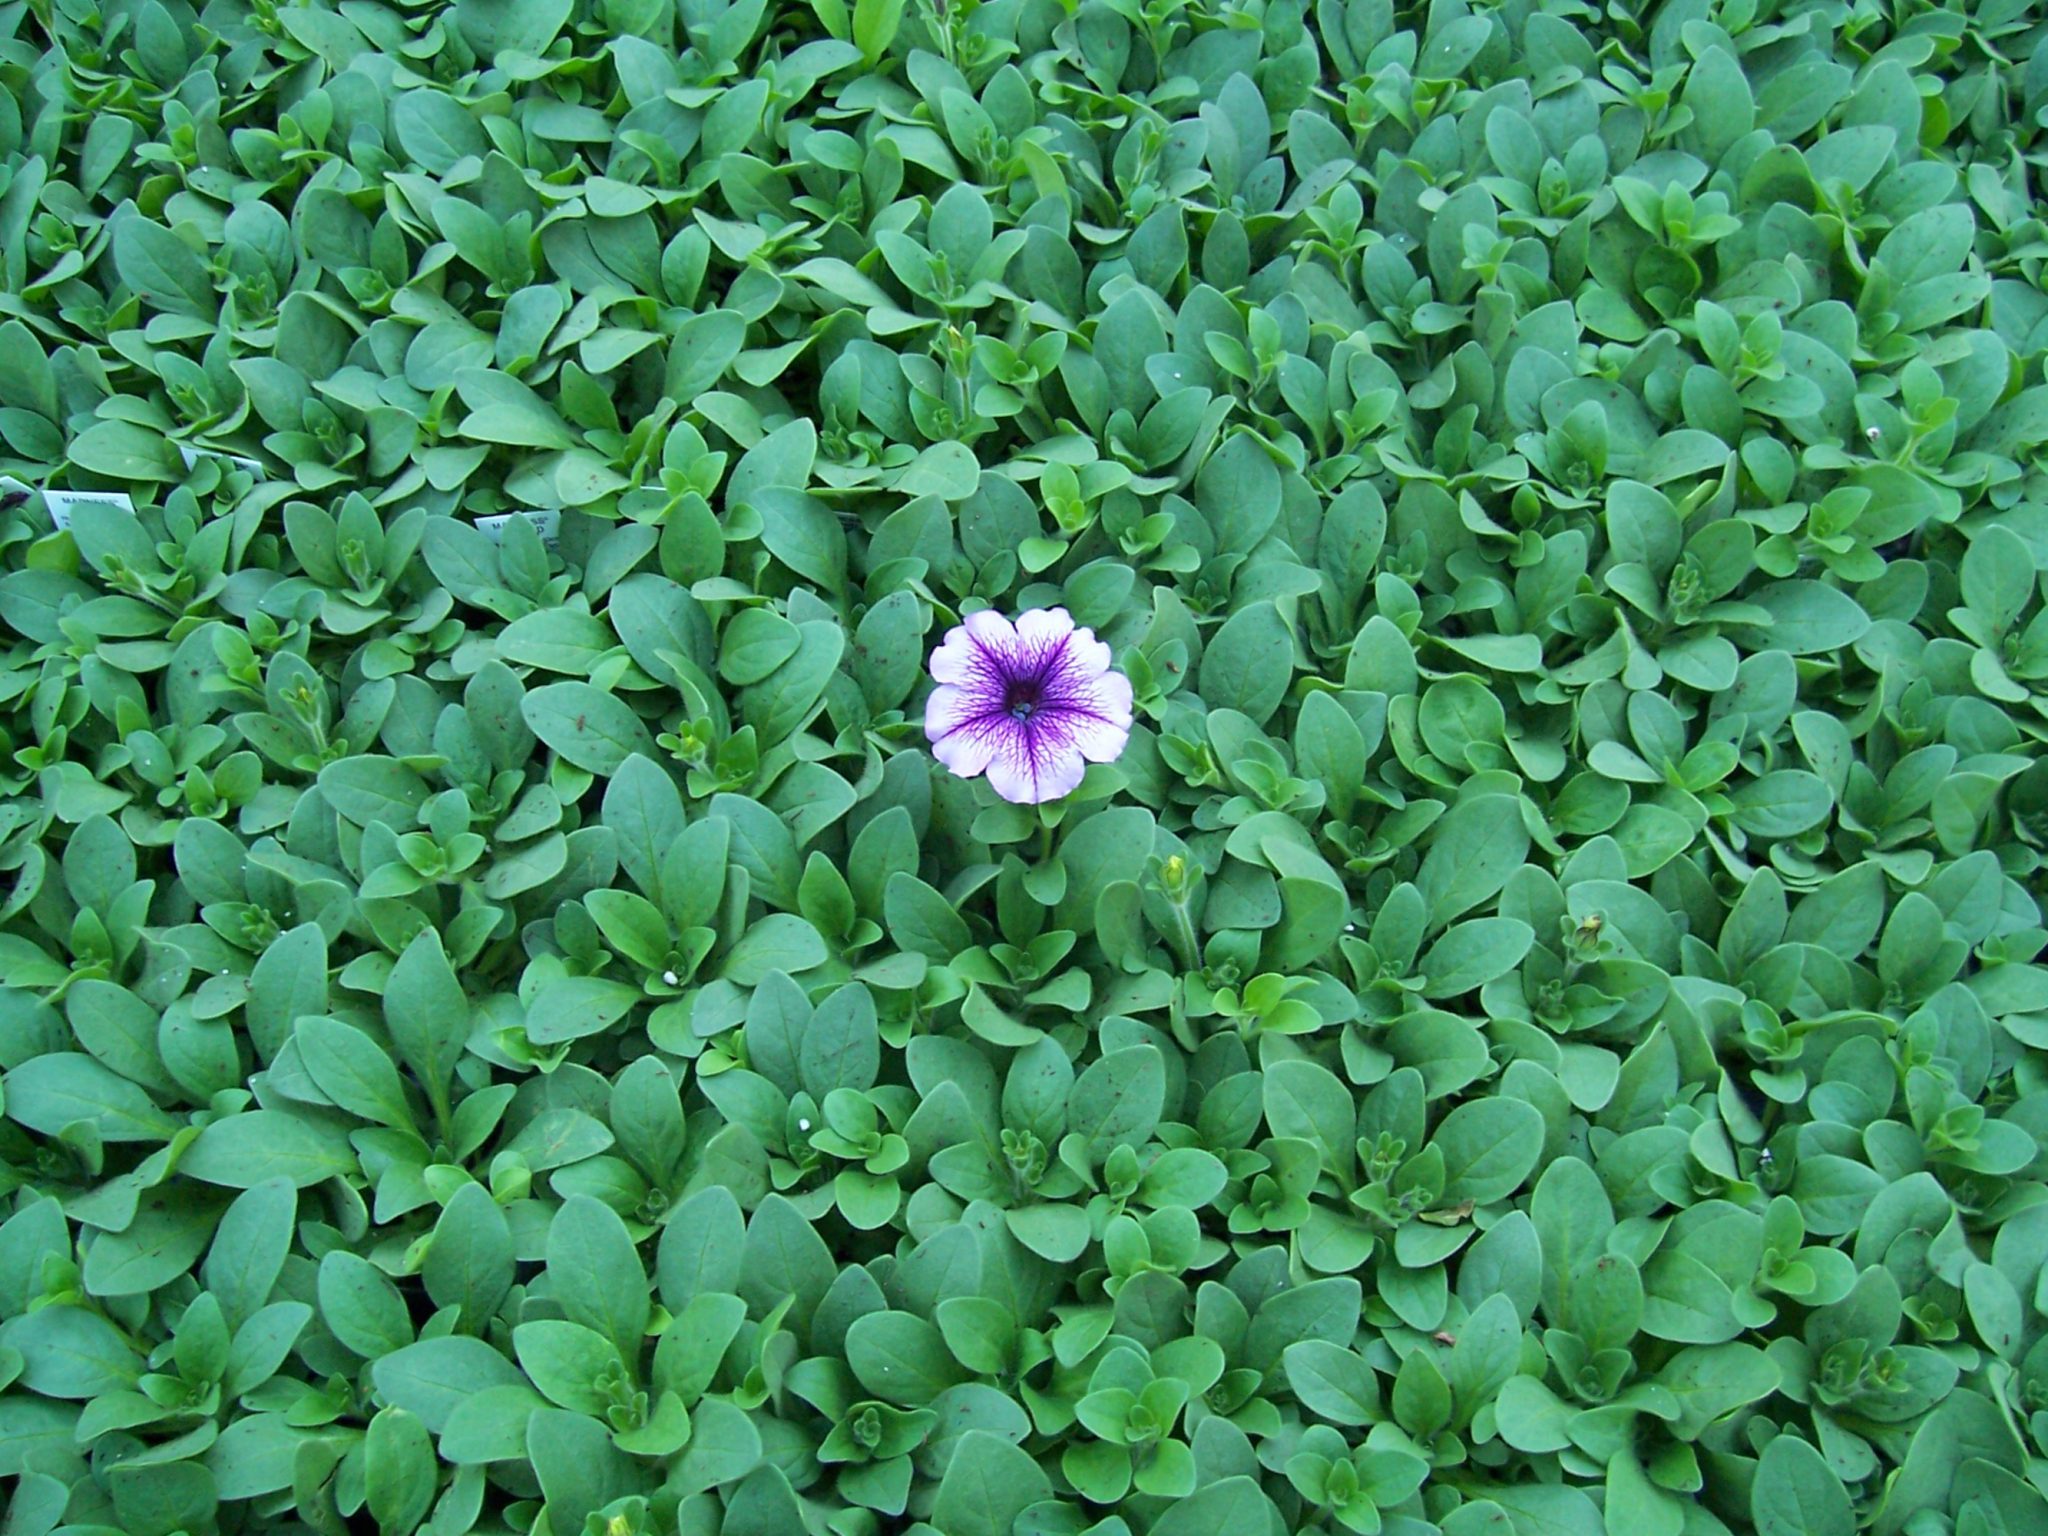 Single petunia in a field of green